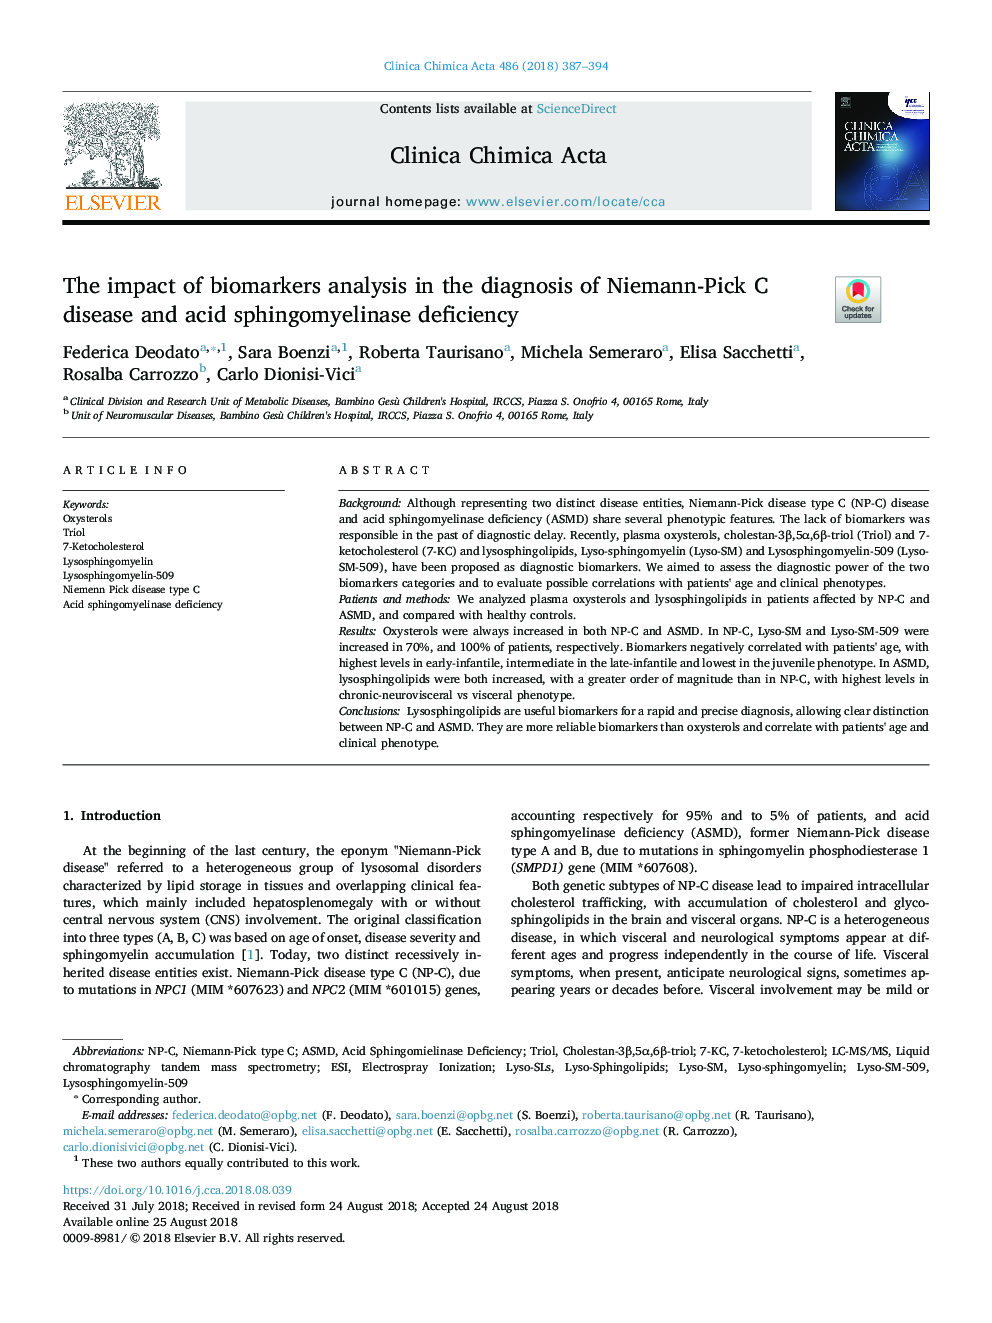 The impact of biomarkers analysis in the diagnosis of Niemann-Pick C disease and acid sphingomyelinase deficiency